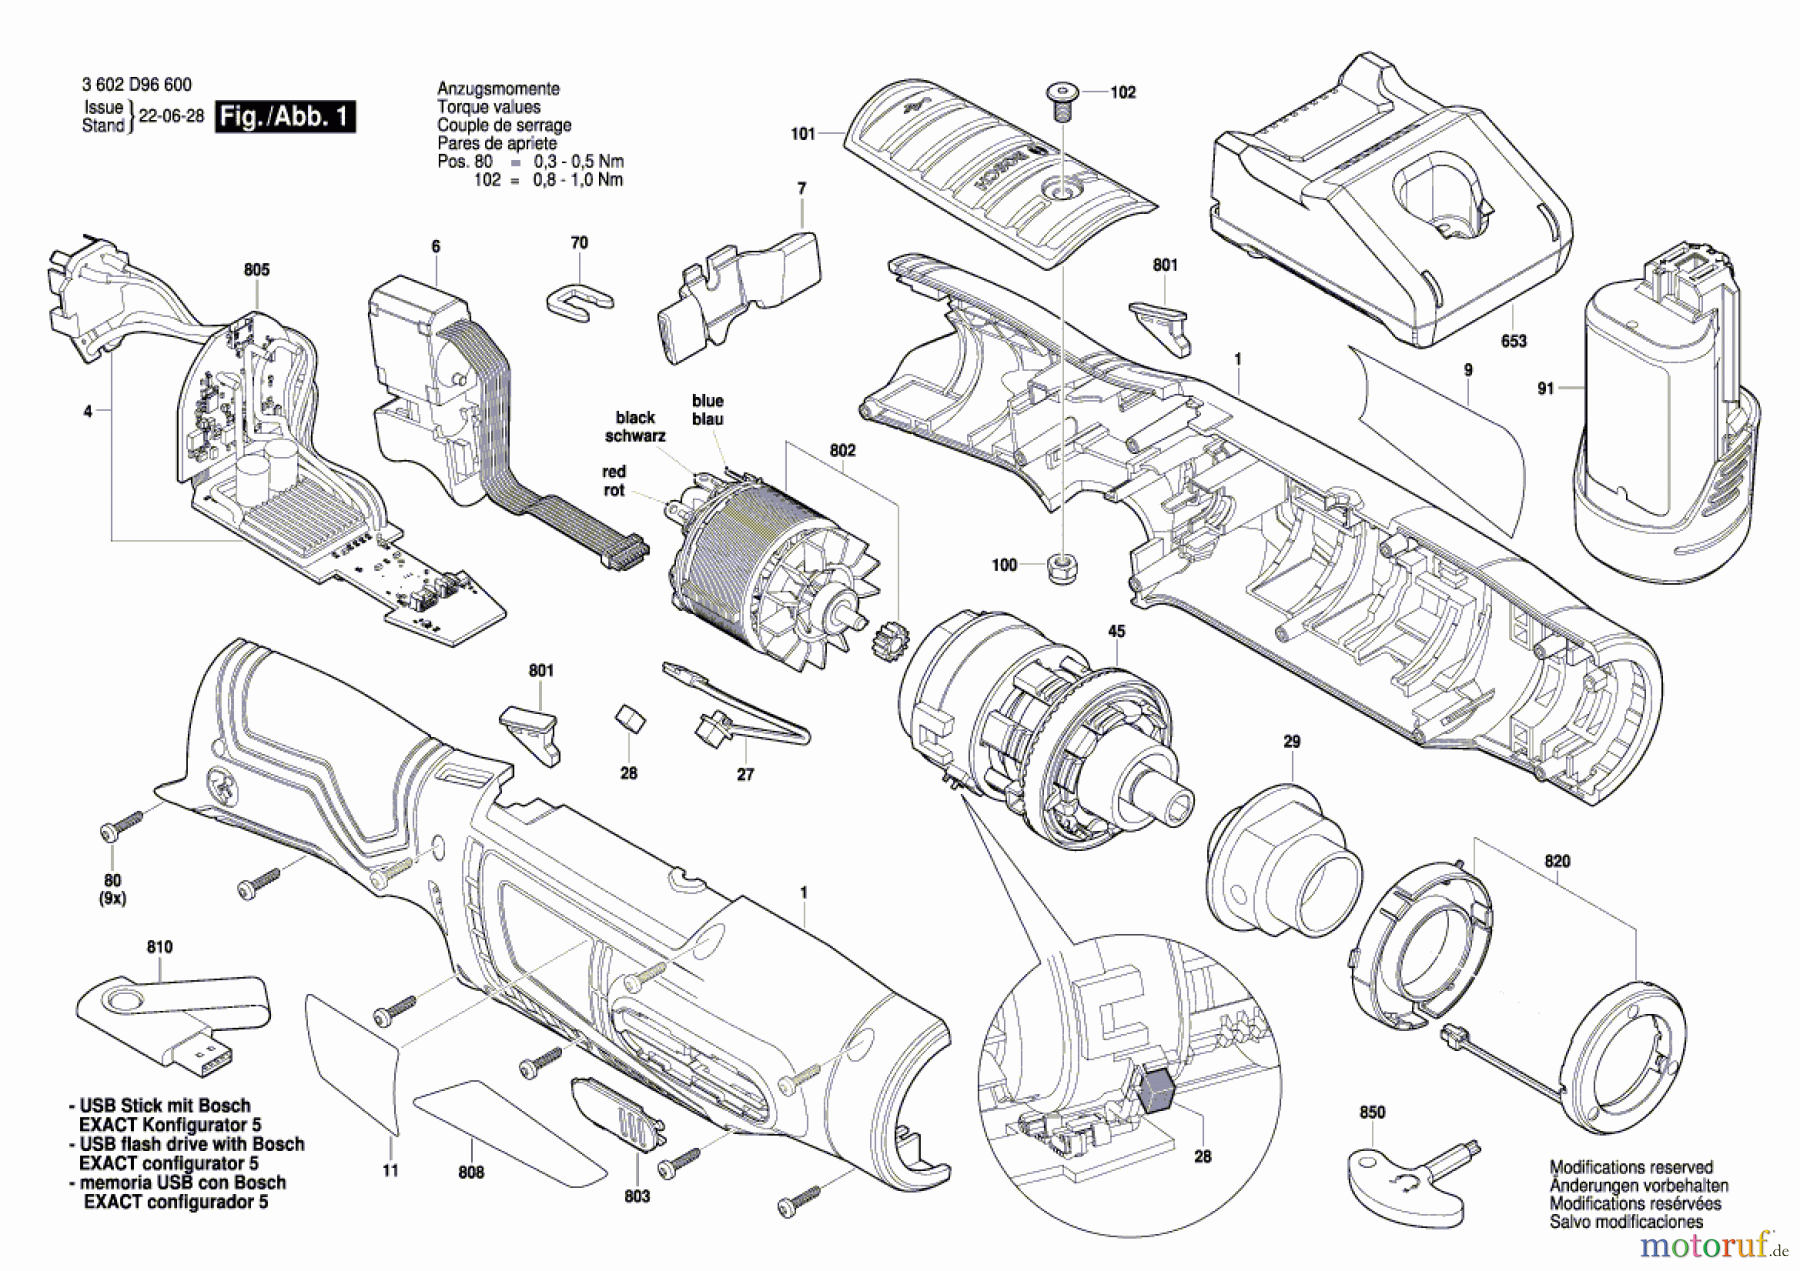  Bosch Akku Werkzeug Iw-Akku-Schrauber ANGLE EXACT 12V-12-400 Seite 1